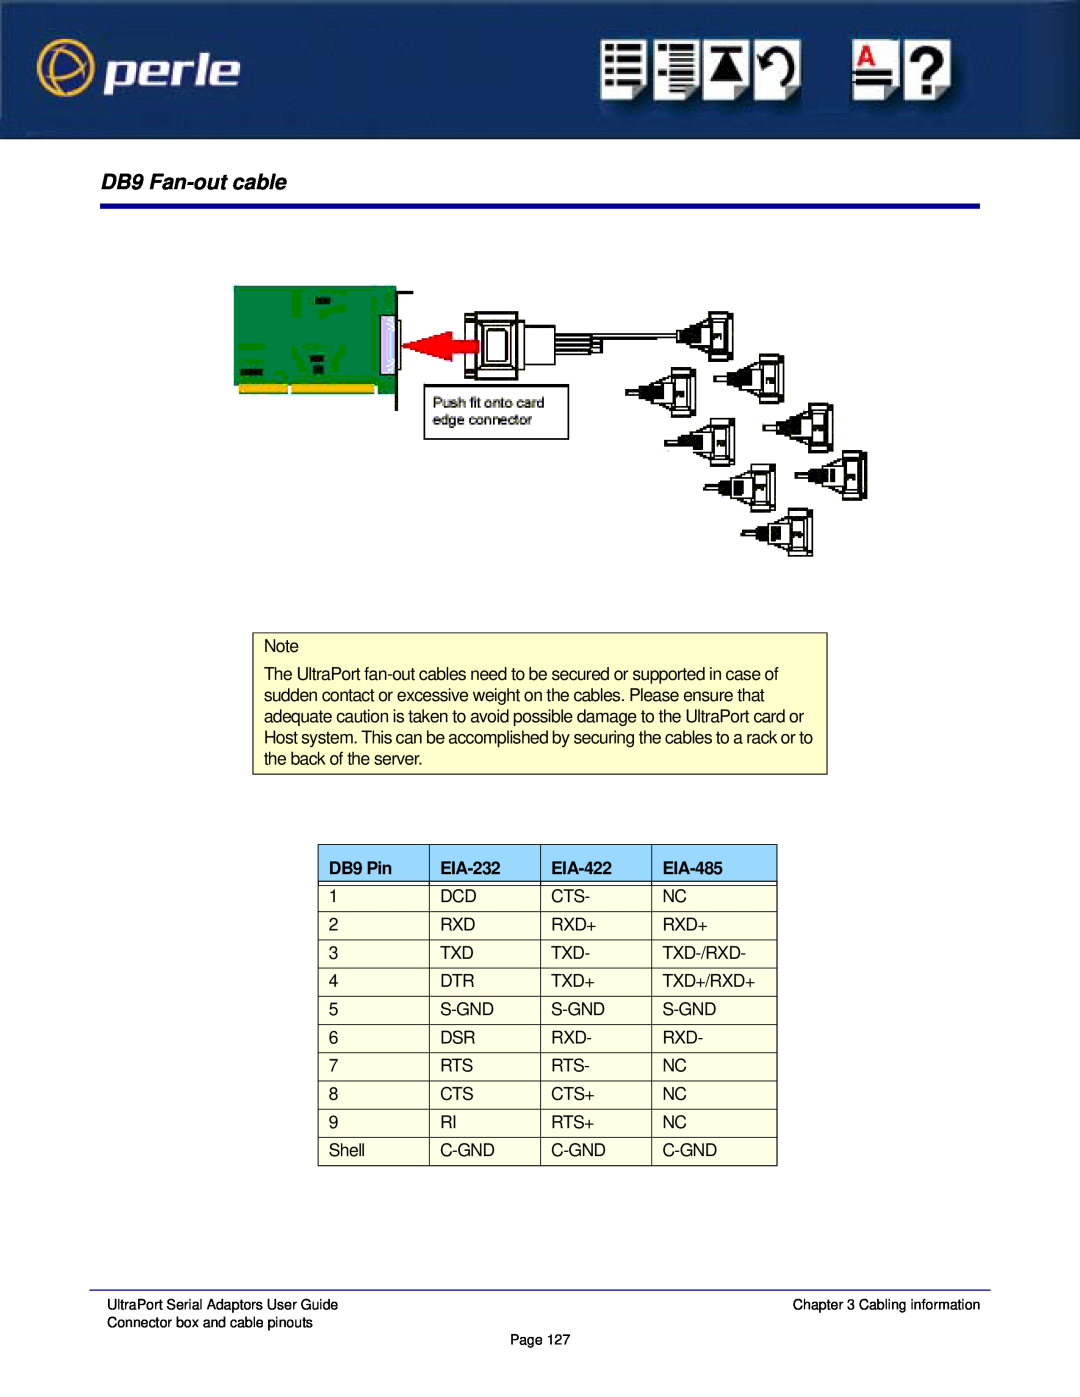 Perle Systems 5500152-23 manual DB9 Fan-out cable, DB9 Pin, EIA-232, EIA-422, EIA-485 